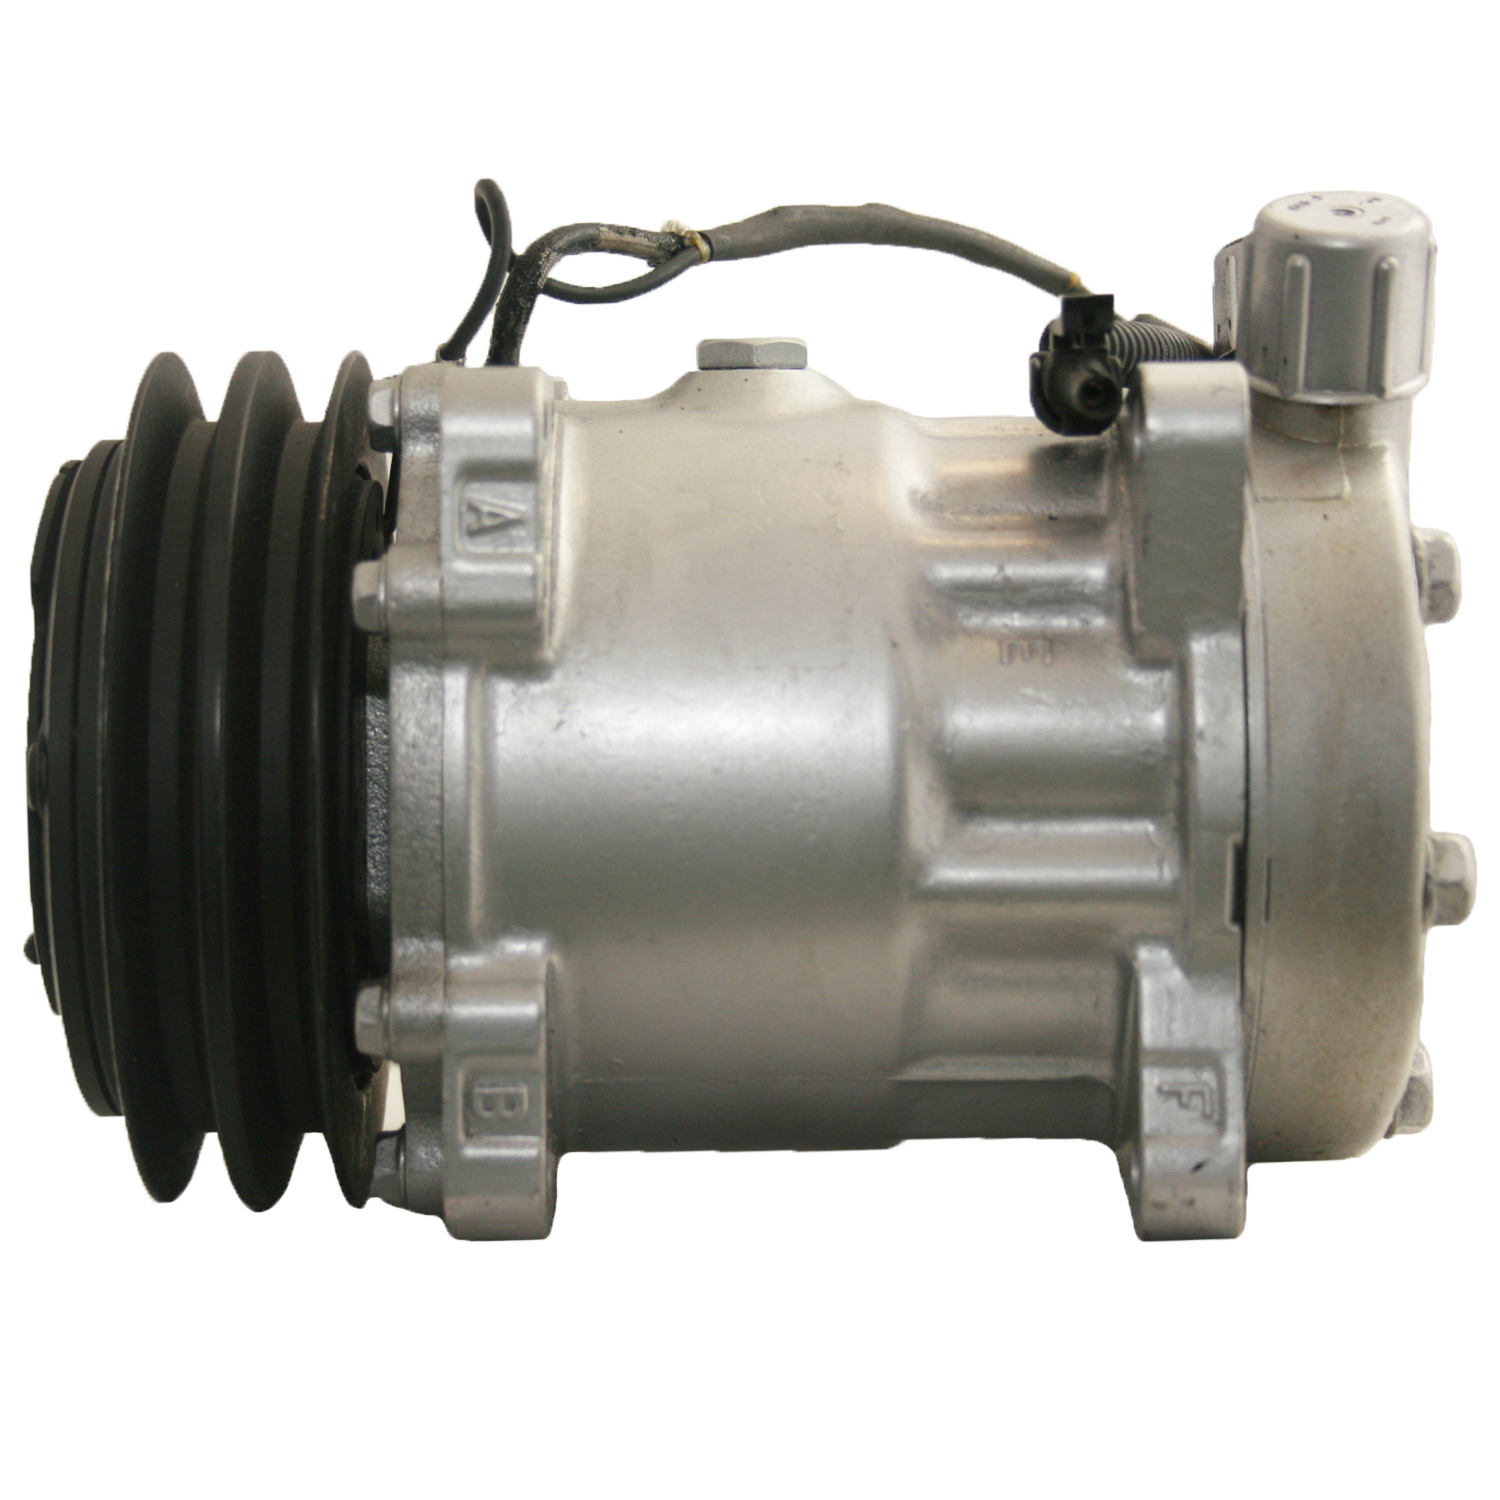 TCW Compressor 40561.201 Remanufactured